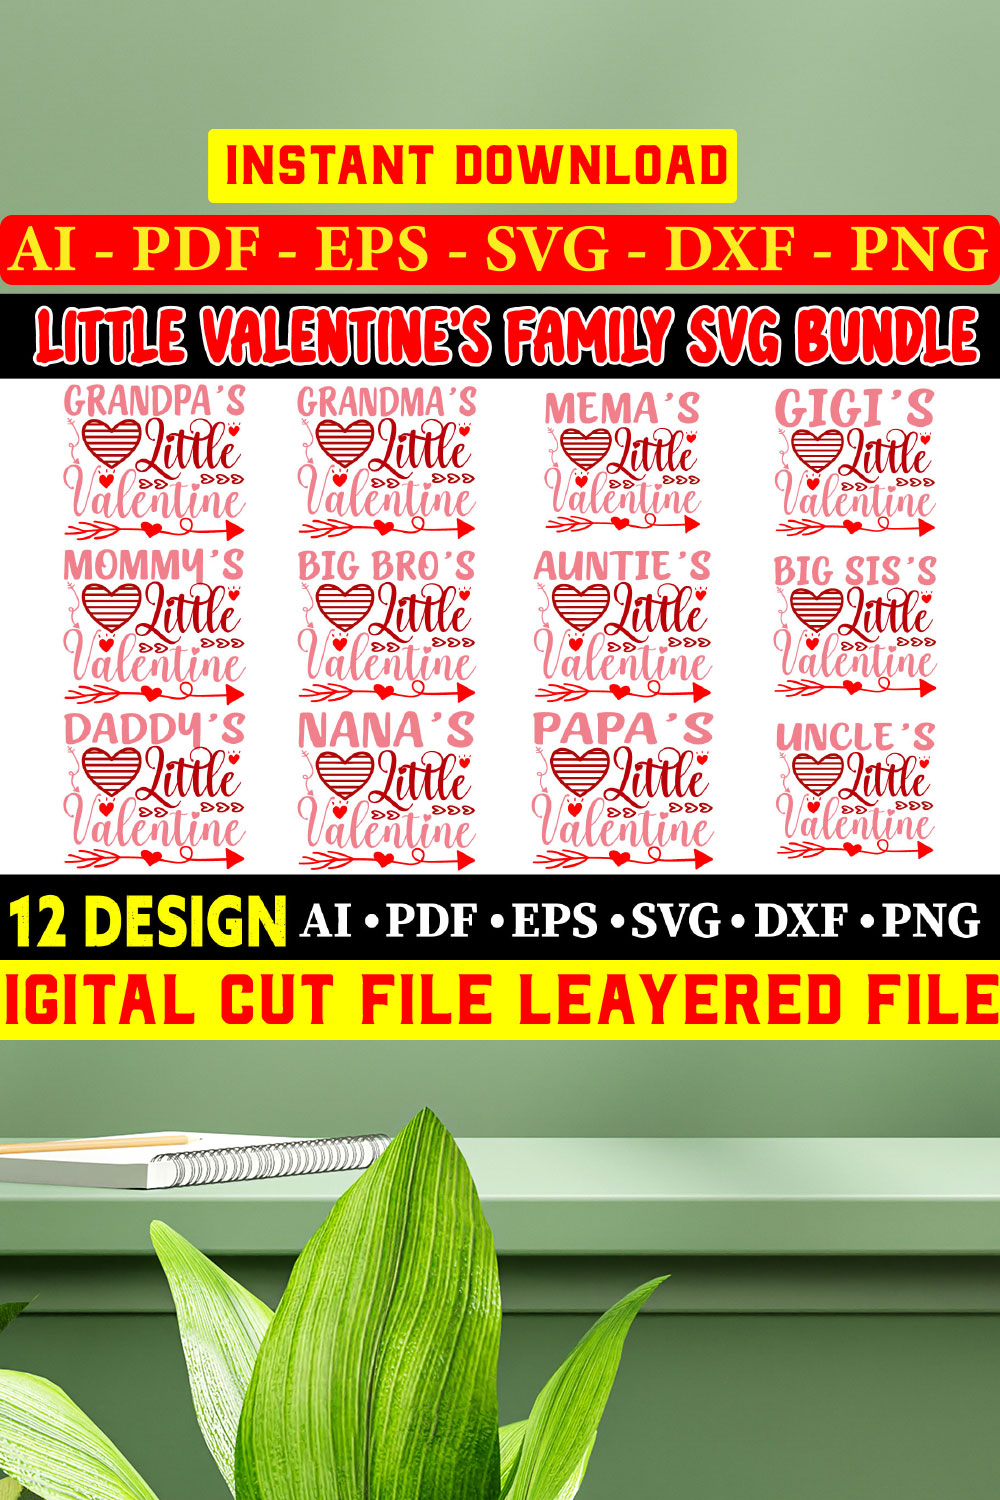 Little Valentine's Day Family SVG Bundle Vol-04 pinterest preview image.